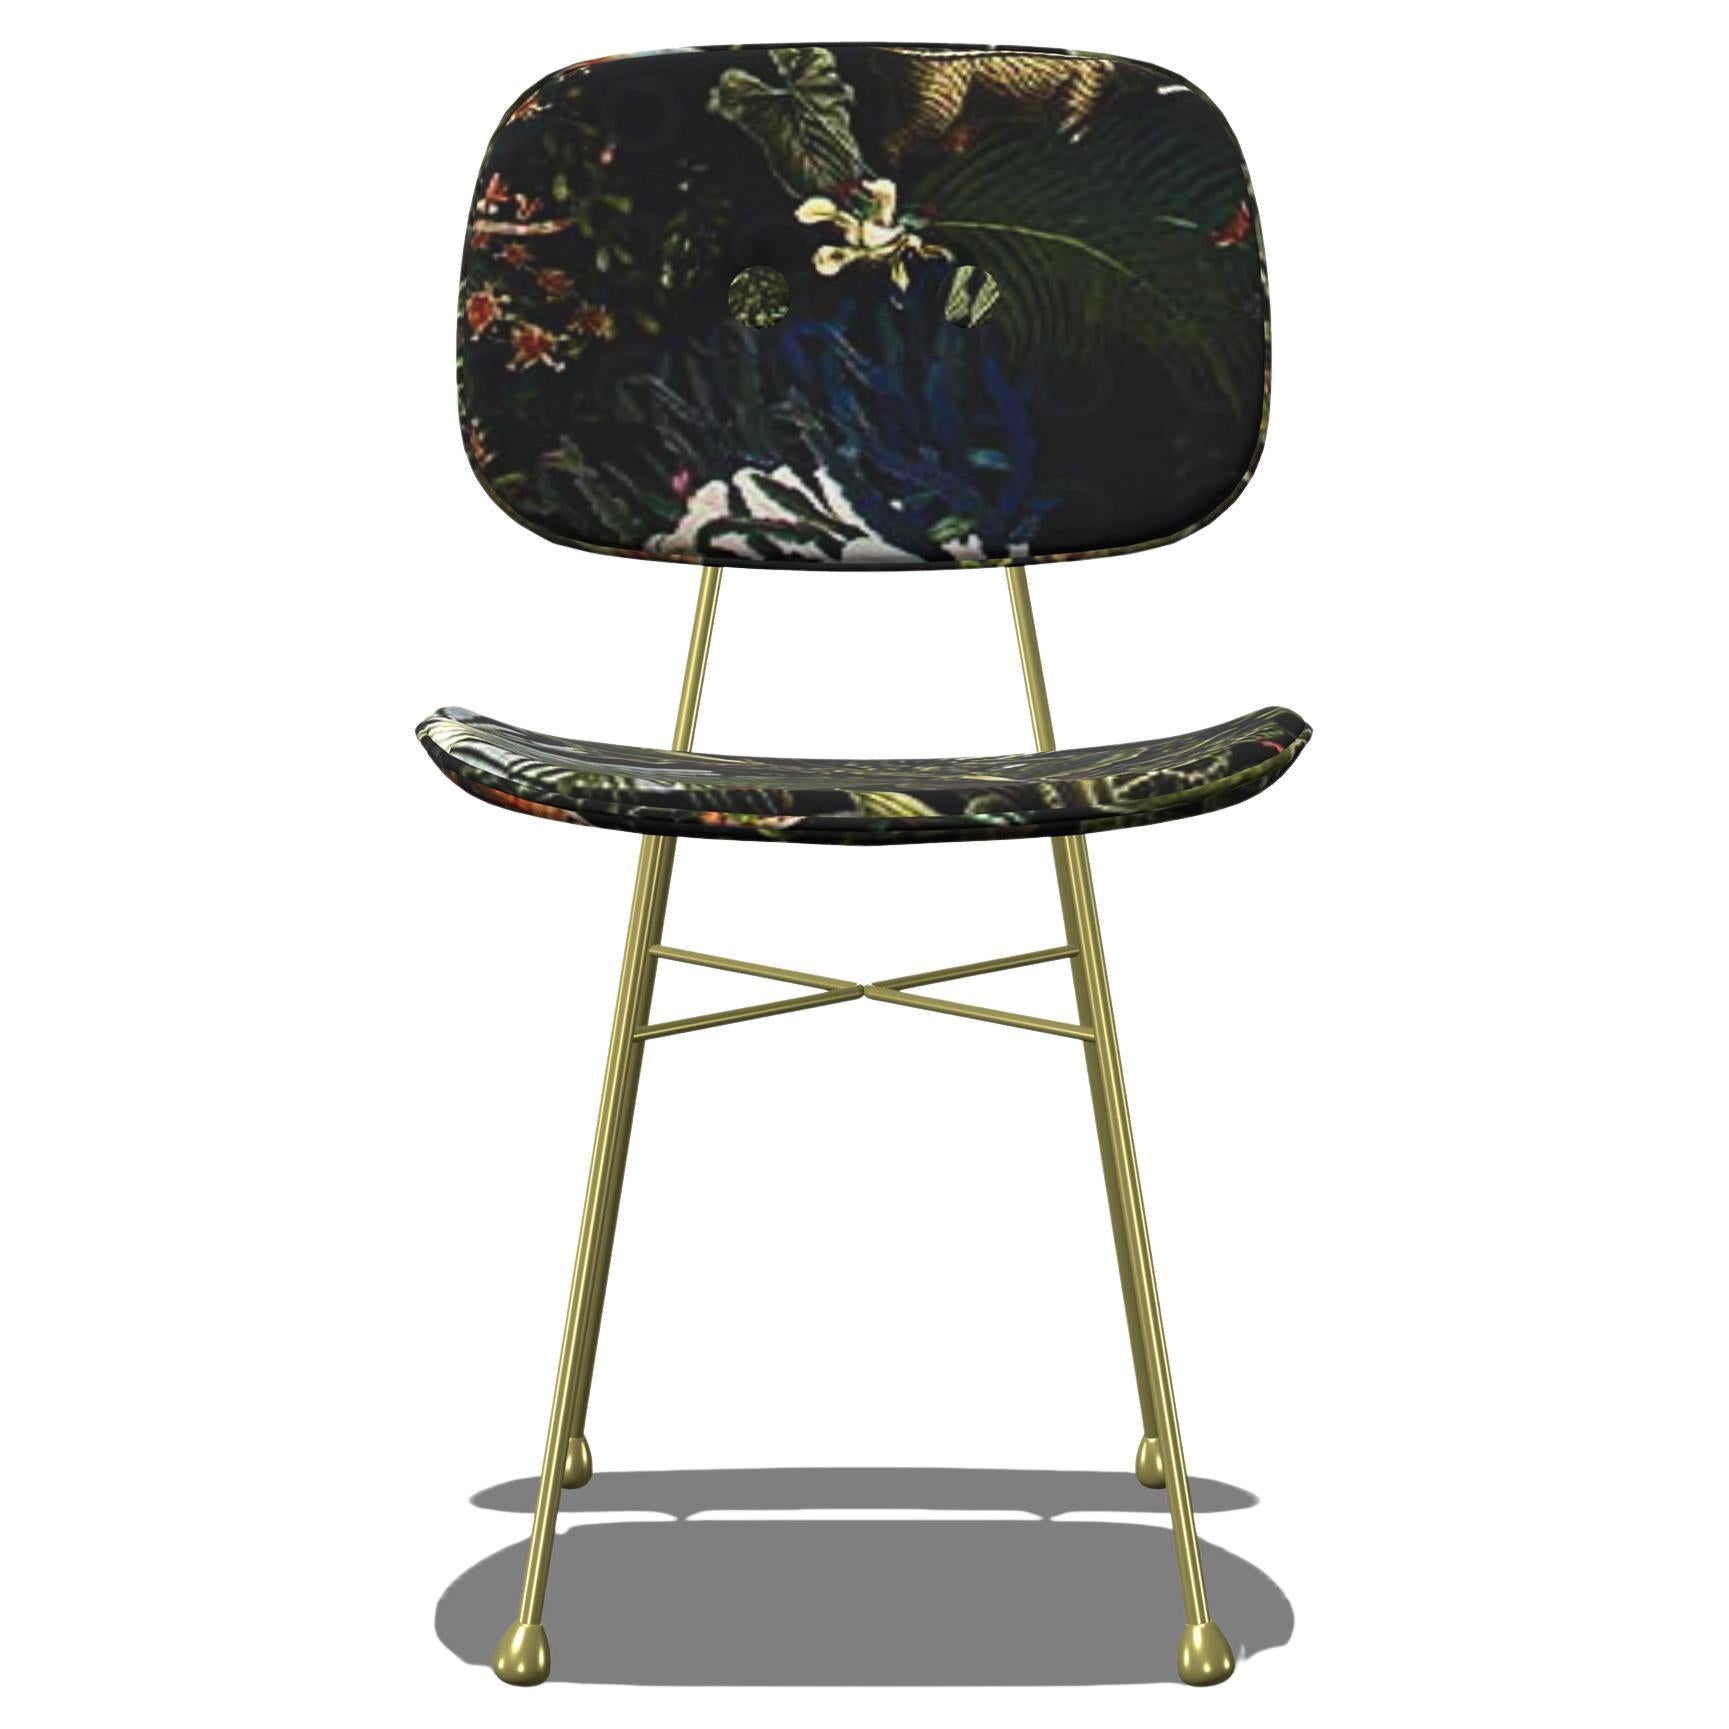 Moooi: Goldener Stuhl aus goldenem Stahl und Samt „The Menagerie of Extinct Animals“